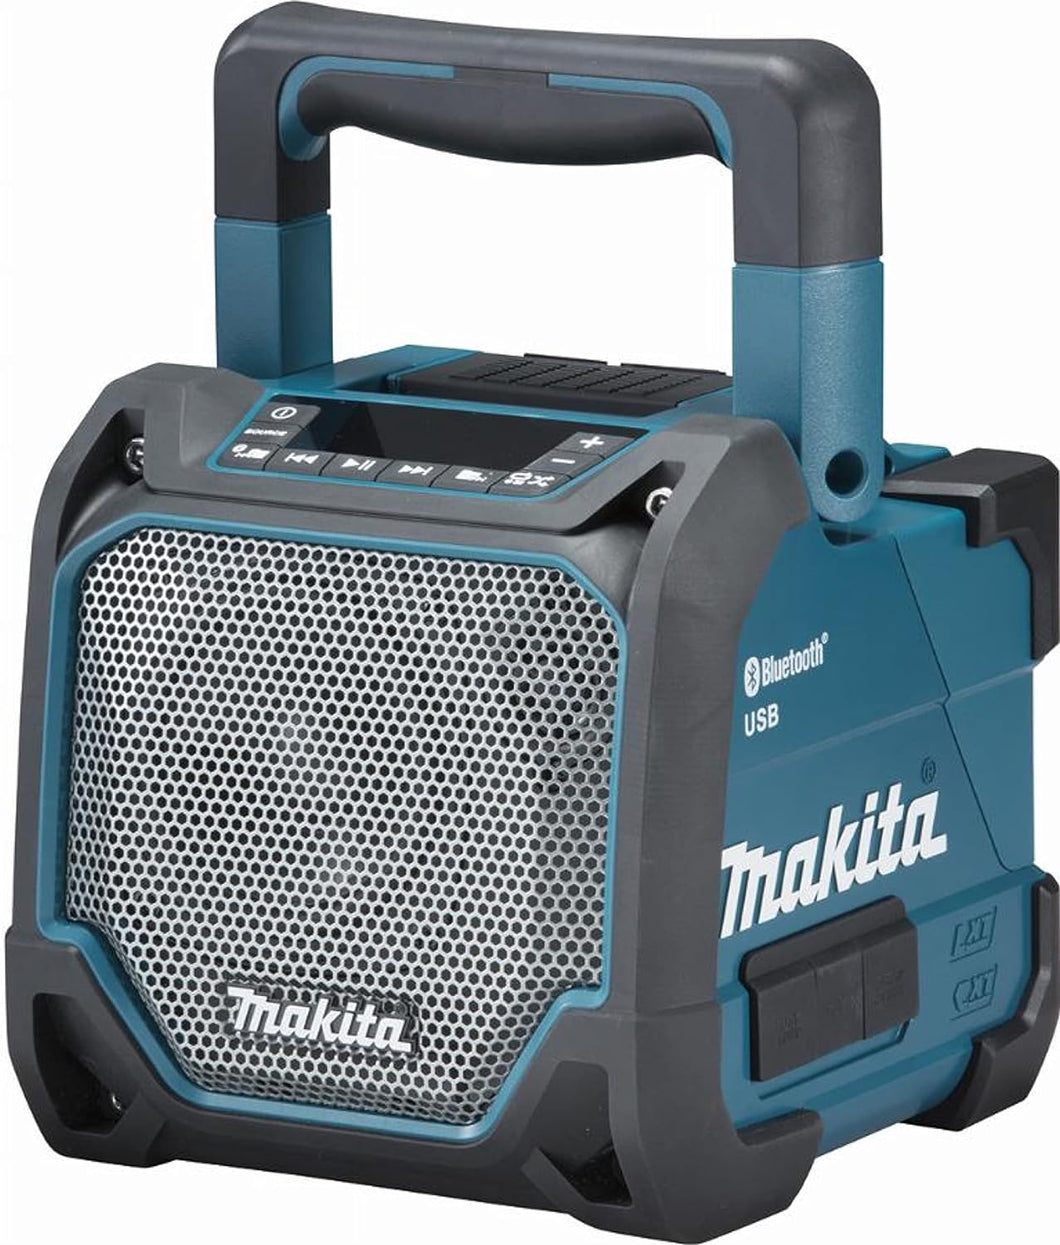 Makita DMR202 10.8V to 18V Li-ion/Mains Speaker with Bluetooth Bare Unit